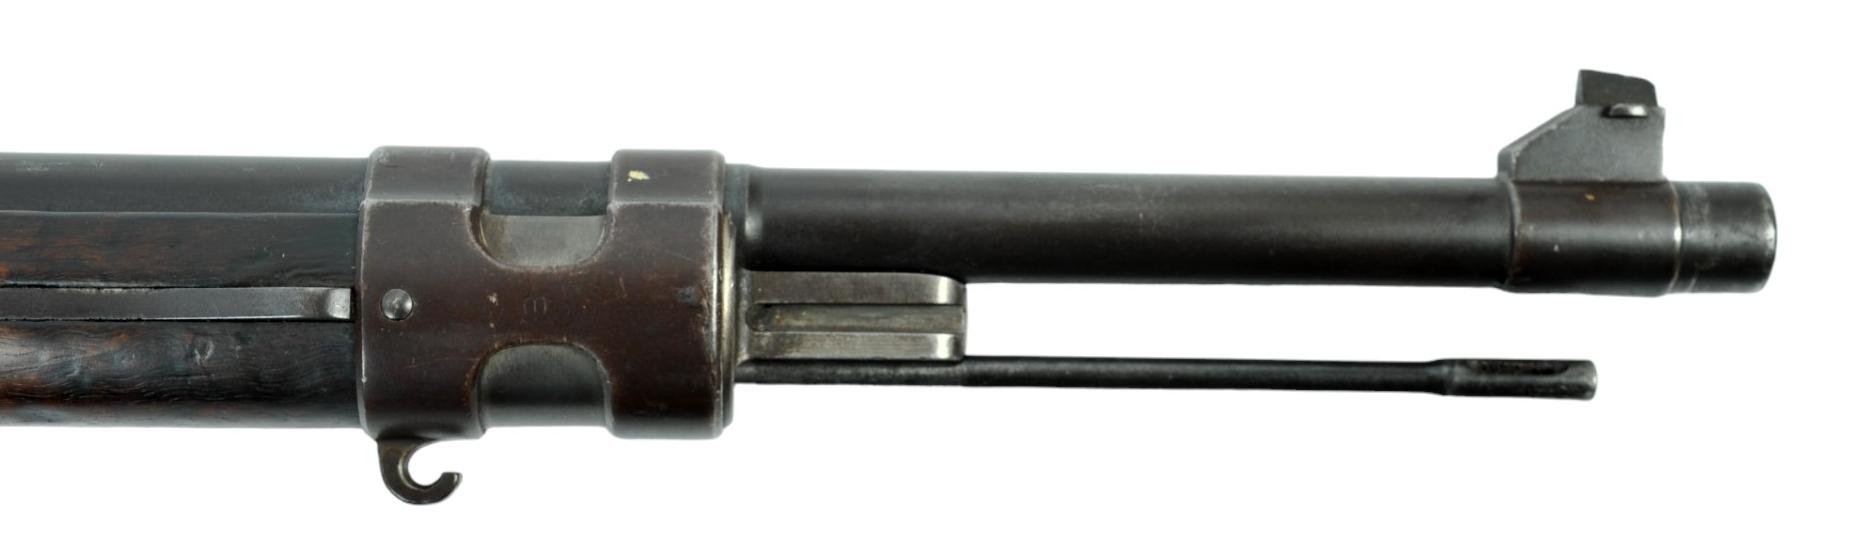 Brazilian Military M1908 7mm Mauser Bolt-Action Rifle - FFL # 18180n (VDM1)